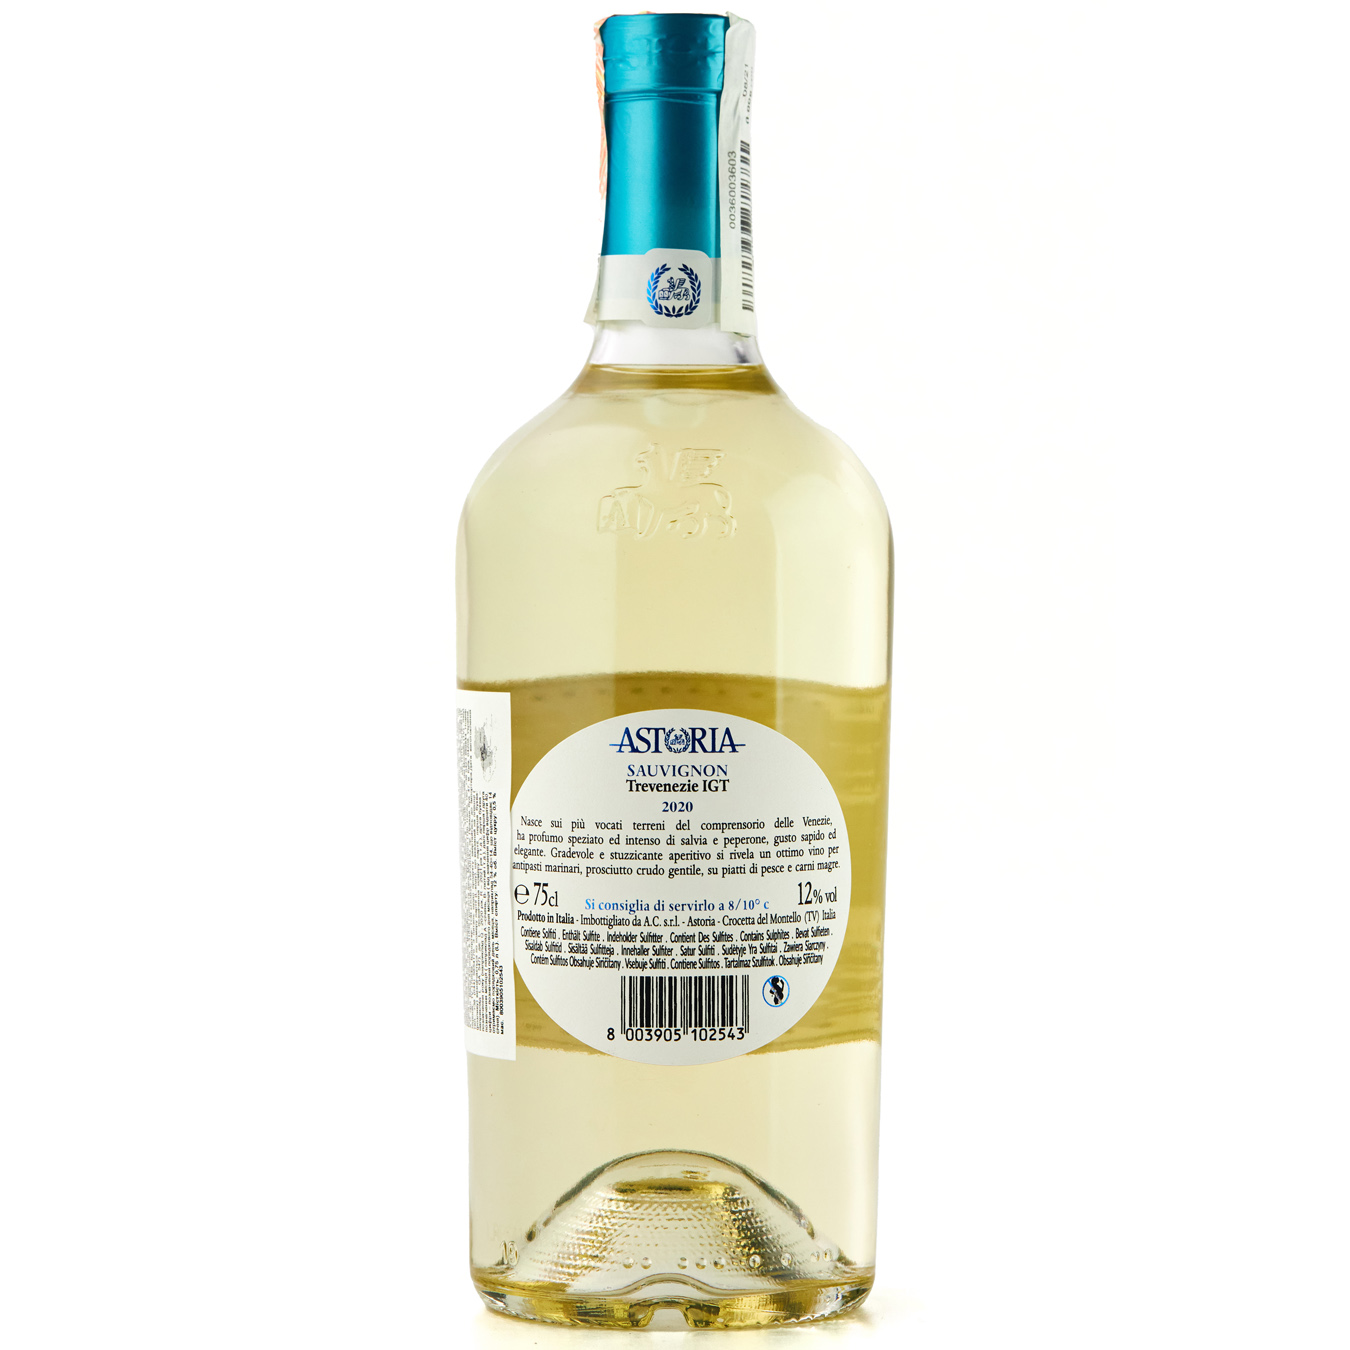 Astoria Suade Sauvignon Blanc Trevenezie IGT white semi-dry wine 12% 0, 75l 2